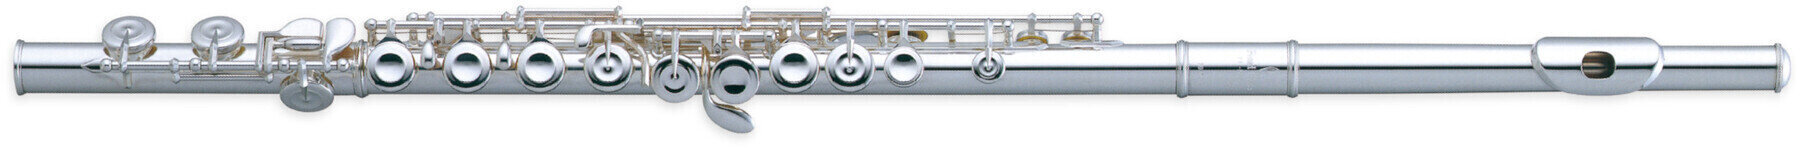 Concert flute Pearl Flute F525E Concert flute